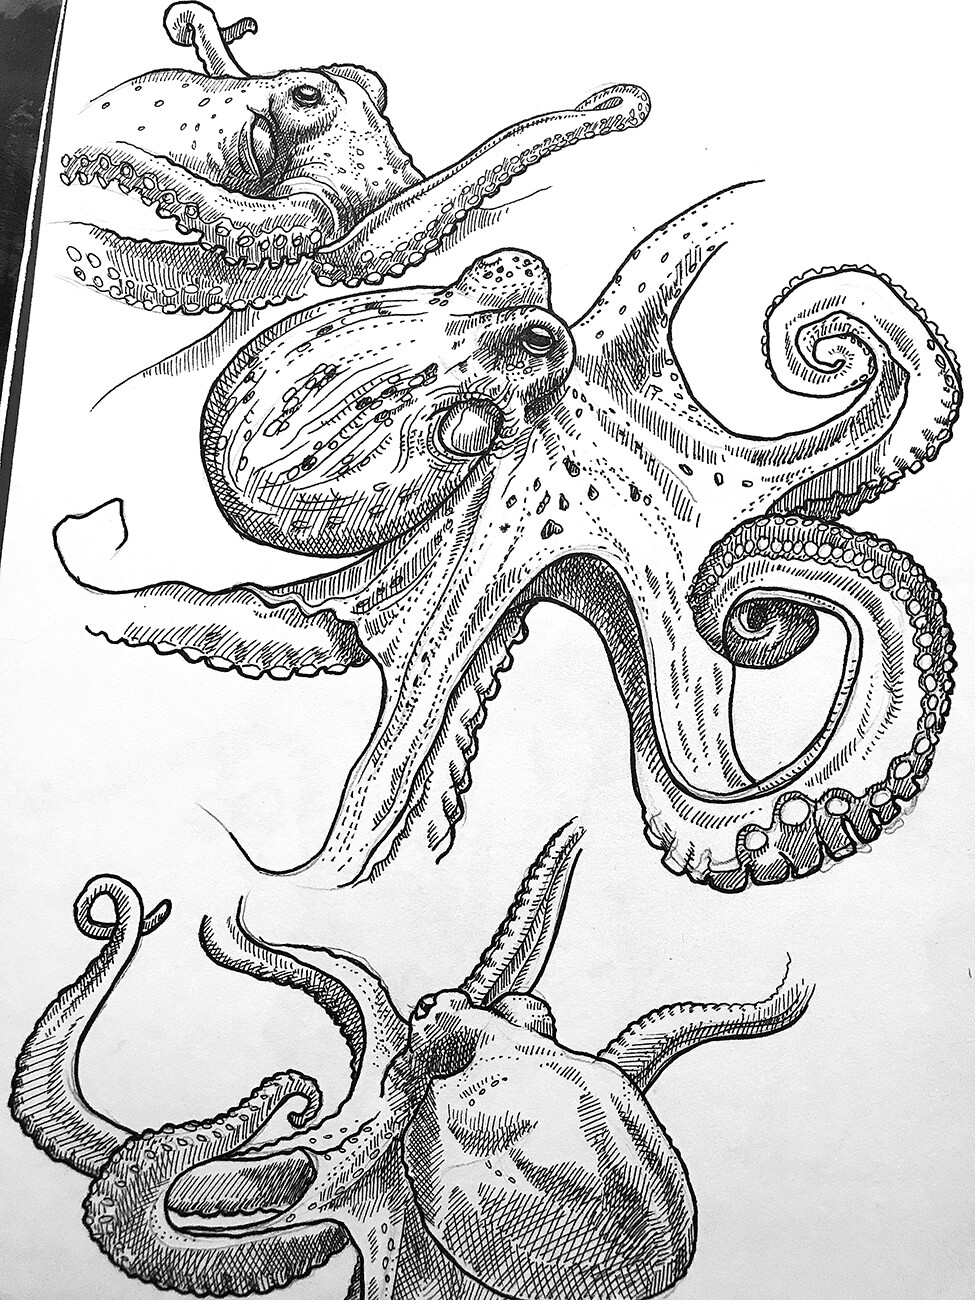 Soft animal - Octopus